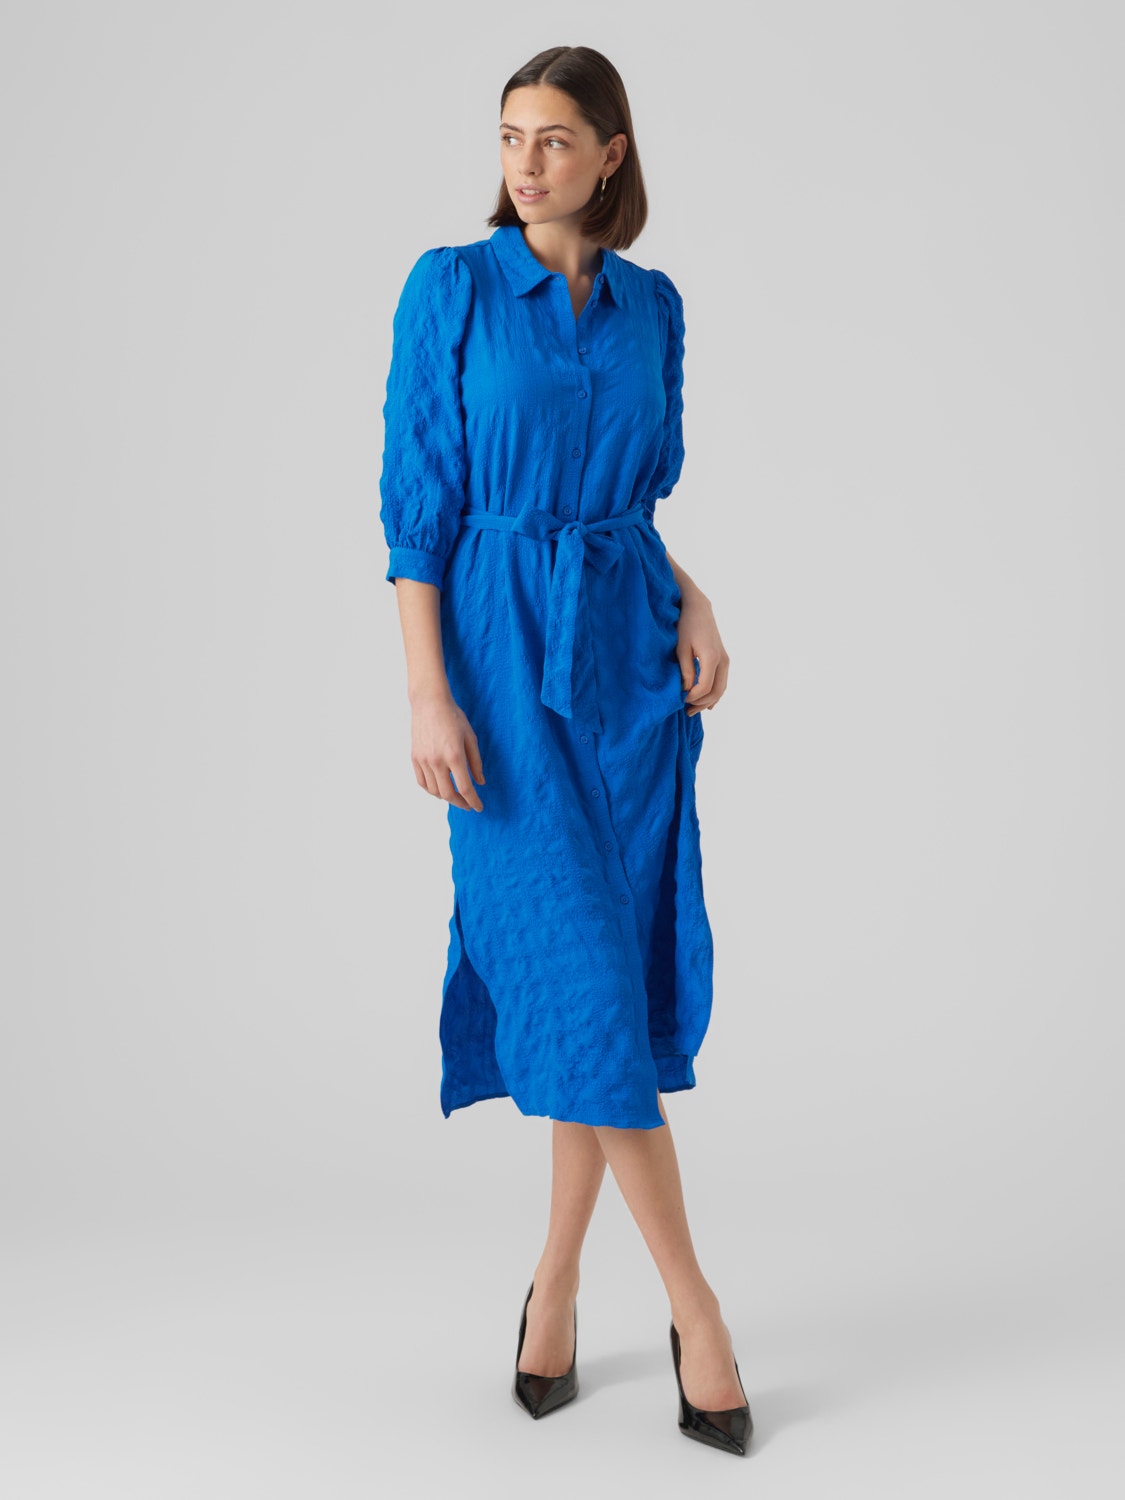 Verwarren Afgekeurd Mainstream Lange jurk | Dark Blue | Vero Moda®